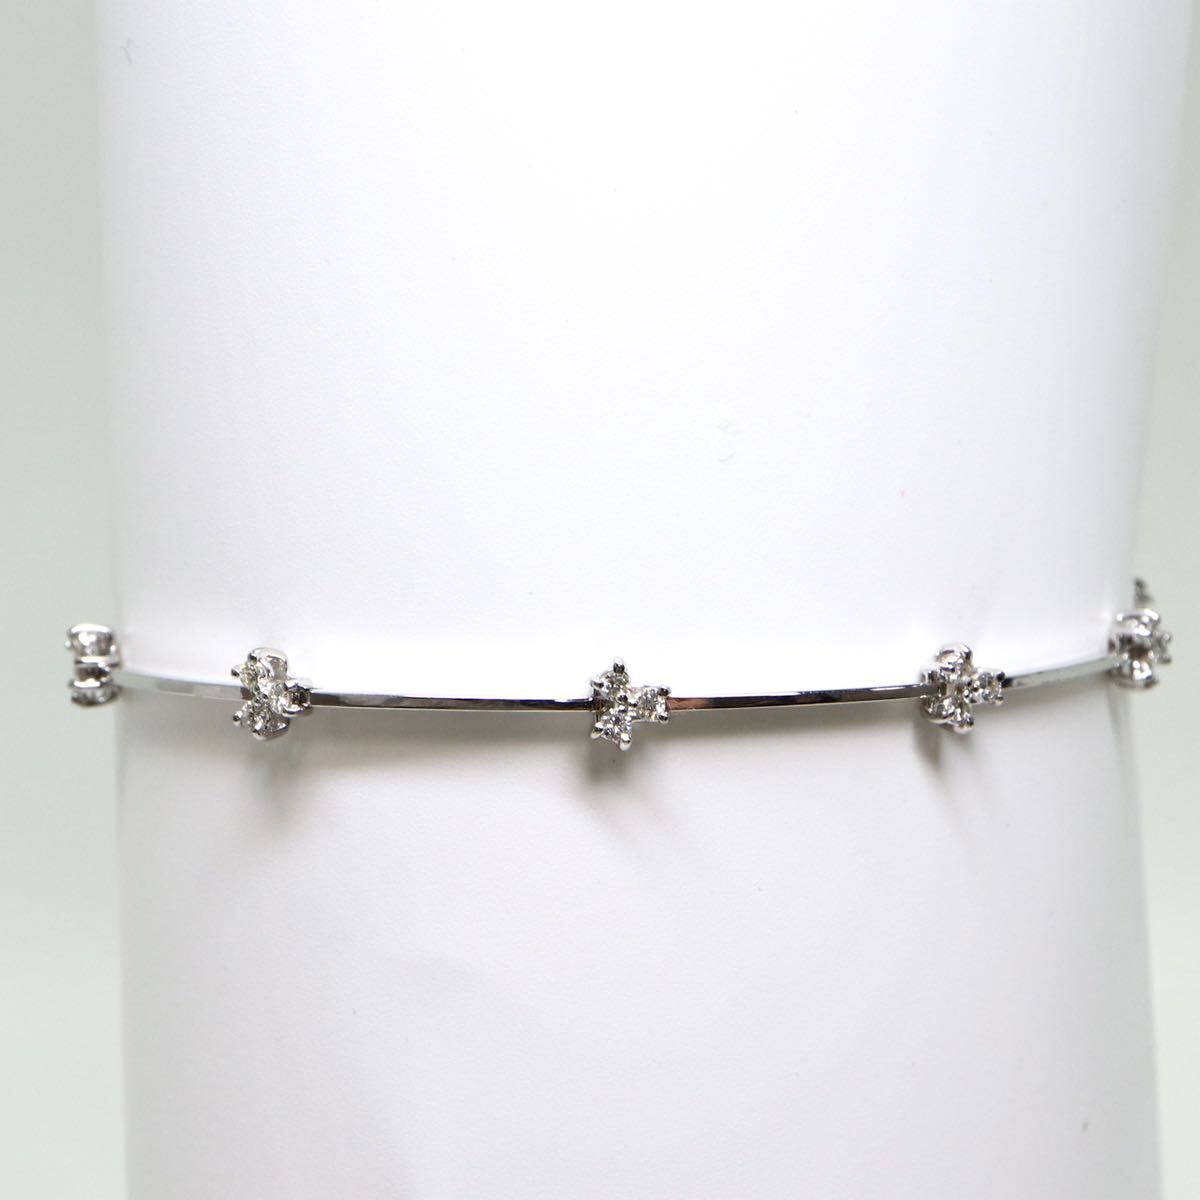 TASAKI(田崎真珠)《K18WG 天然ダイヤモンドブレスレット》A 3.7g 約18.5cm 0.24ct diamond necklace jewelry EA2/EA2